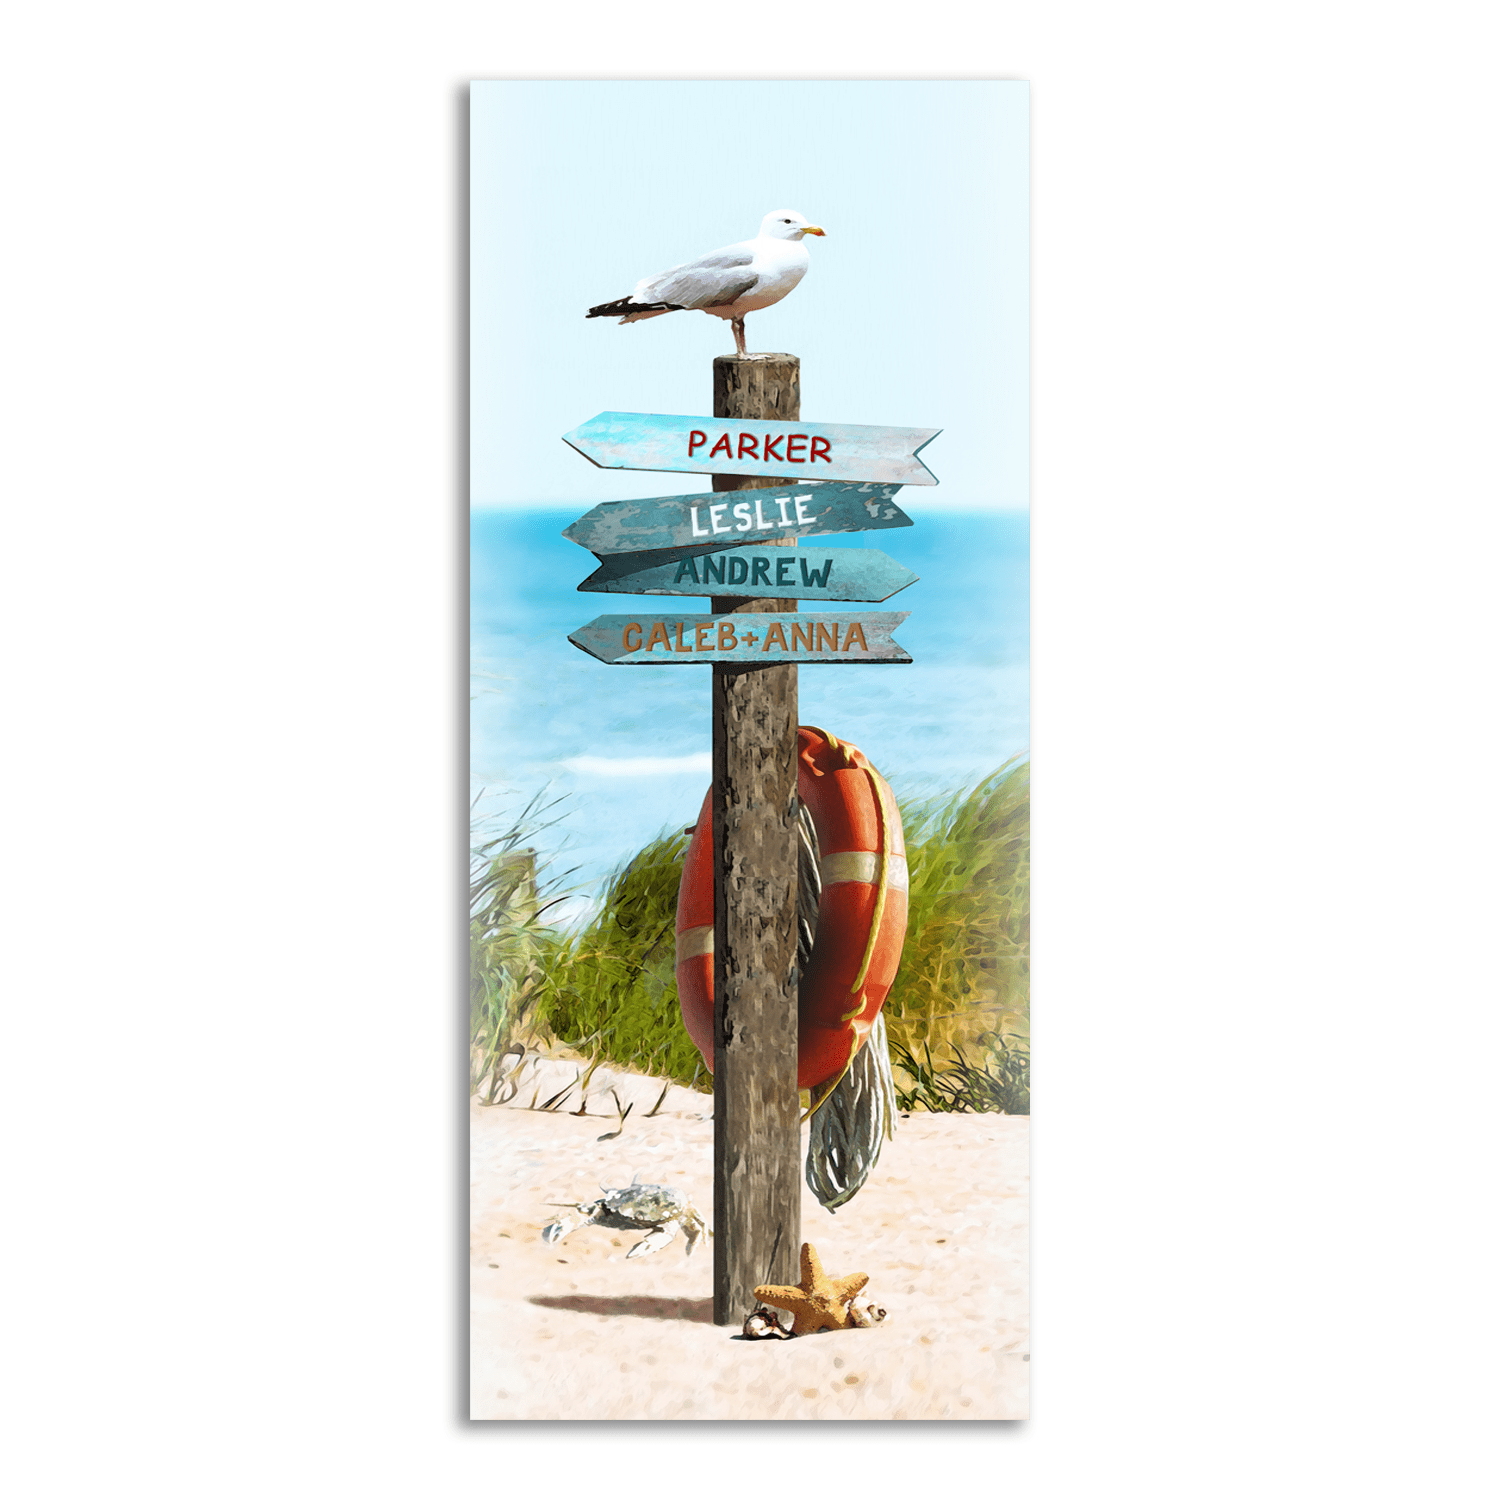 Coastal Beach Scene Art - Personalized art from Personal Prints